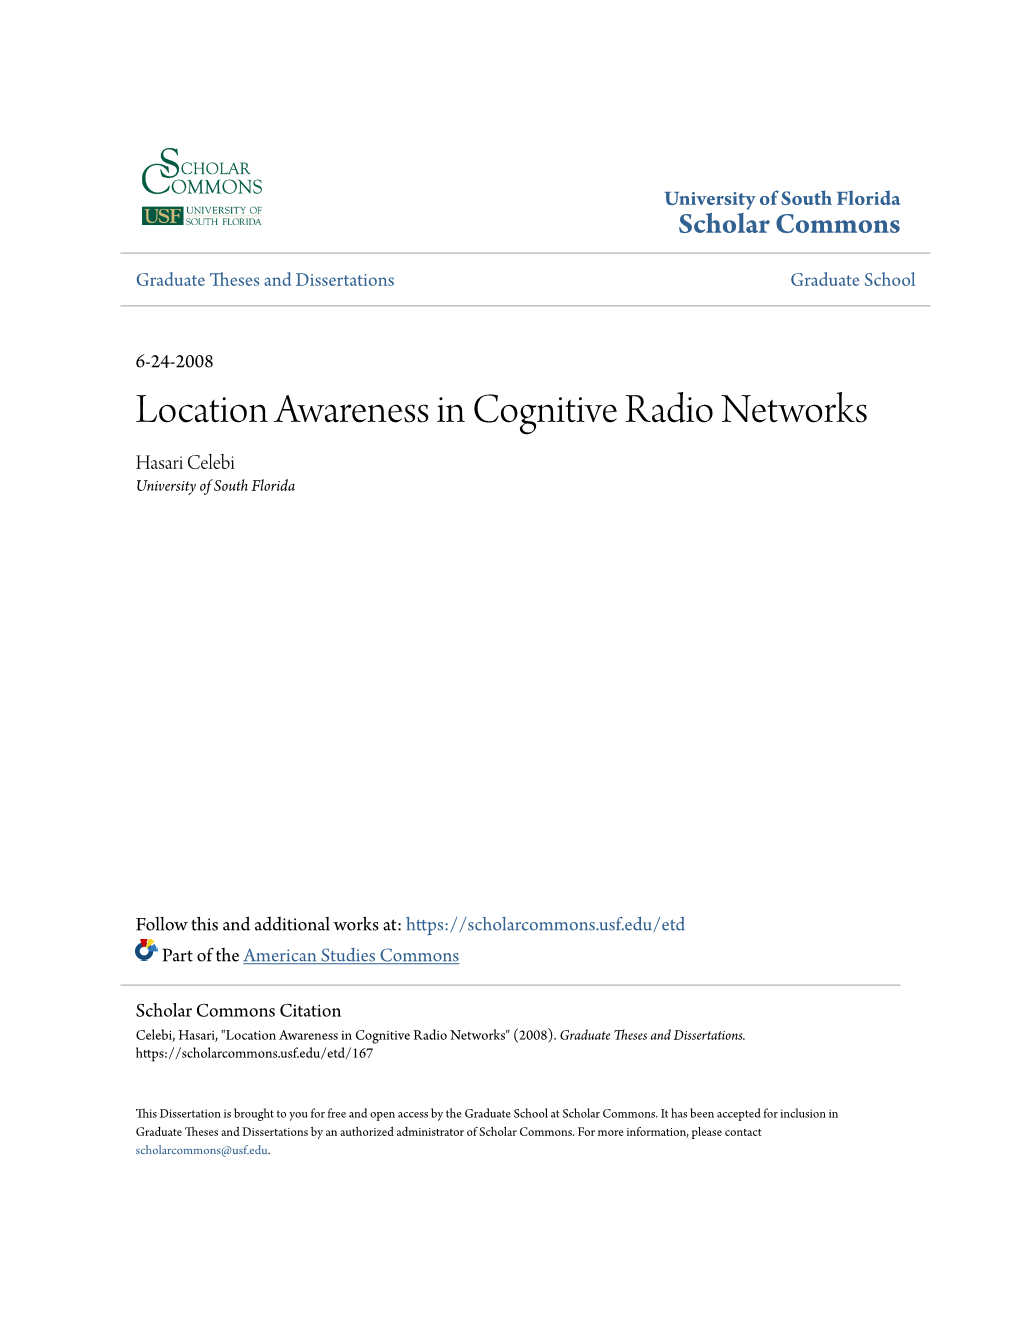 Location Awareness in Cognitive Radio Networks Hasari Celebi University of South Florida